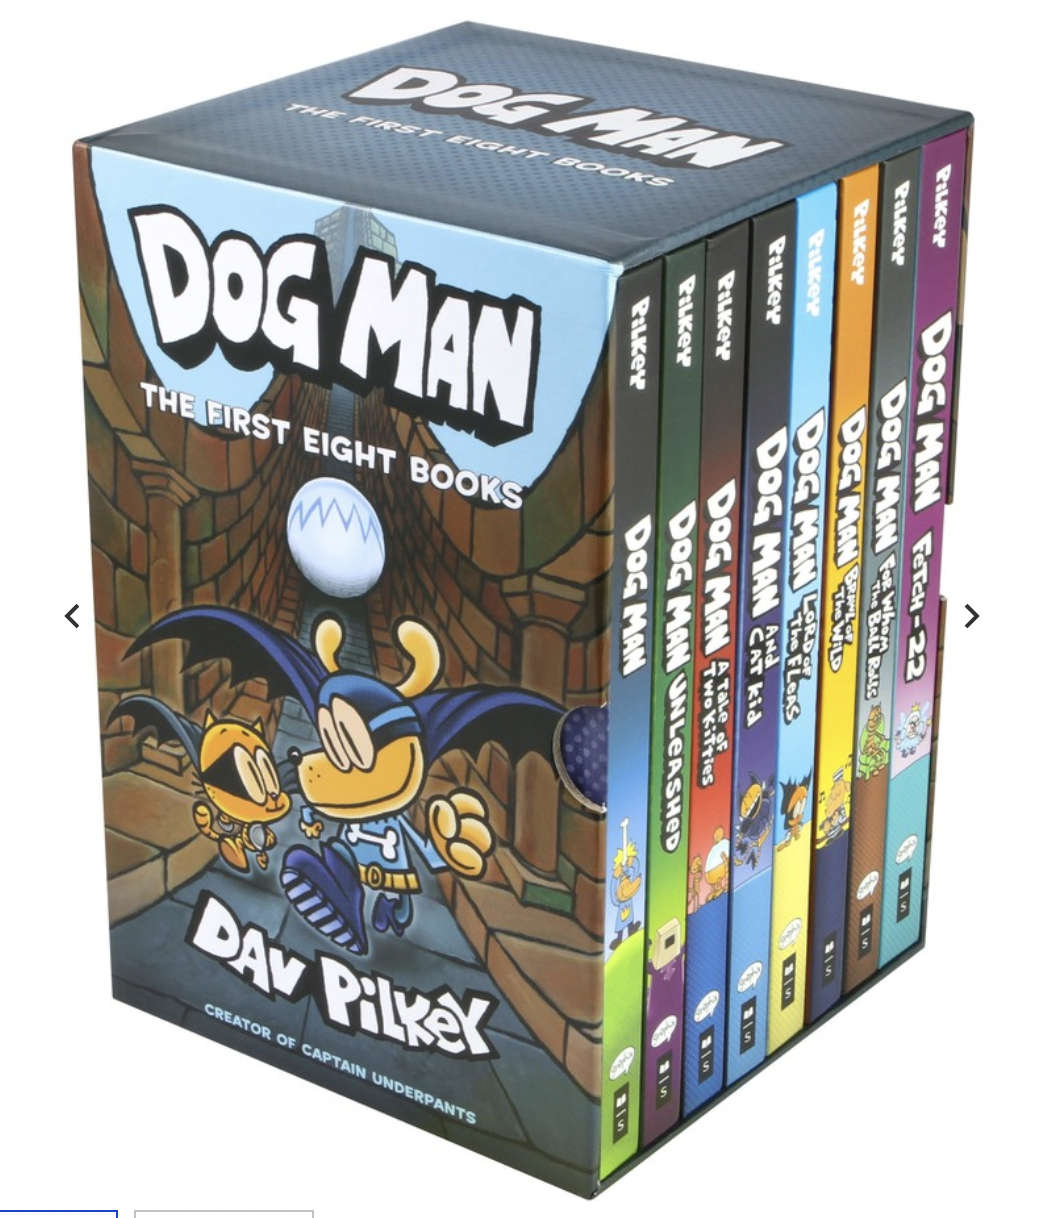 Dog Man: The First Eight Books by Dav Pilkey